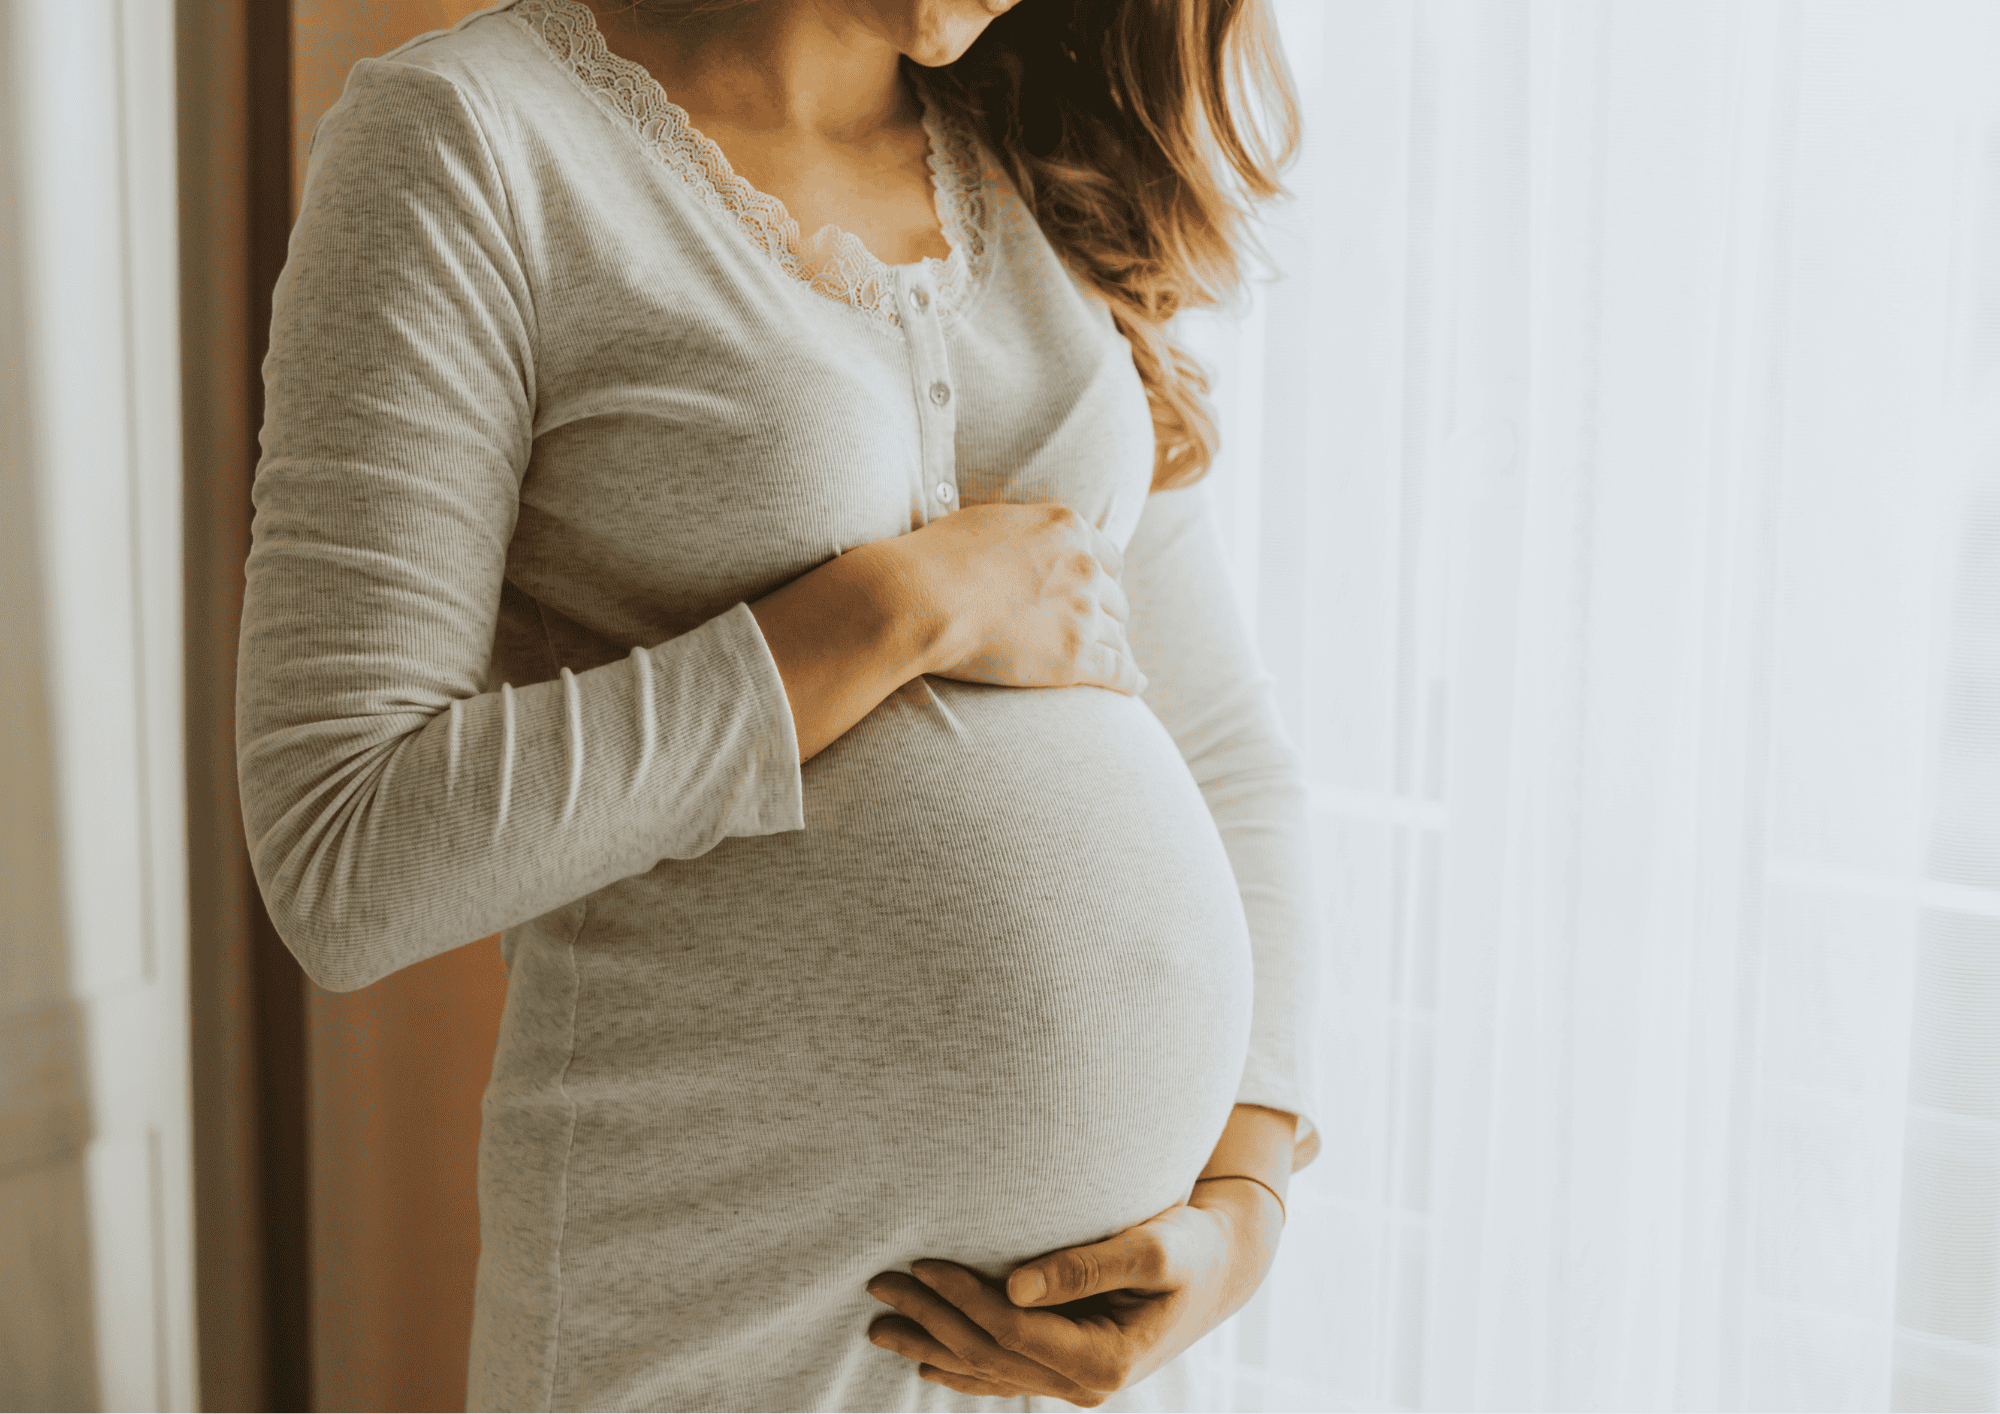 Black pepper in pregnancy: Pregnant Woman